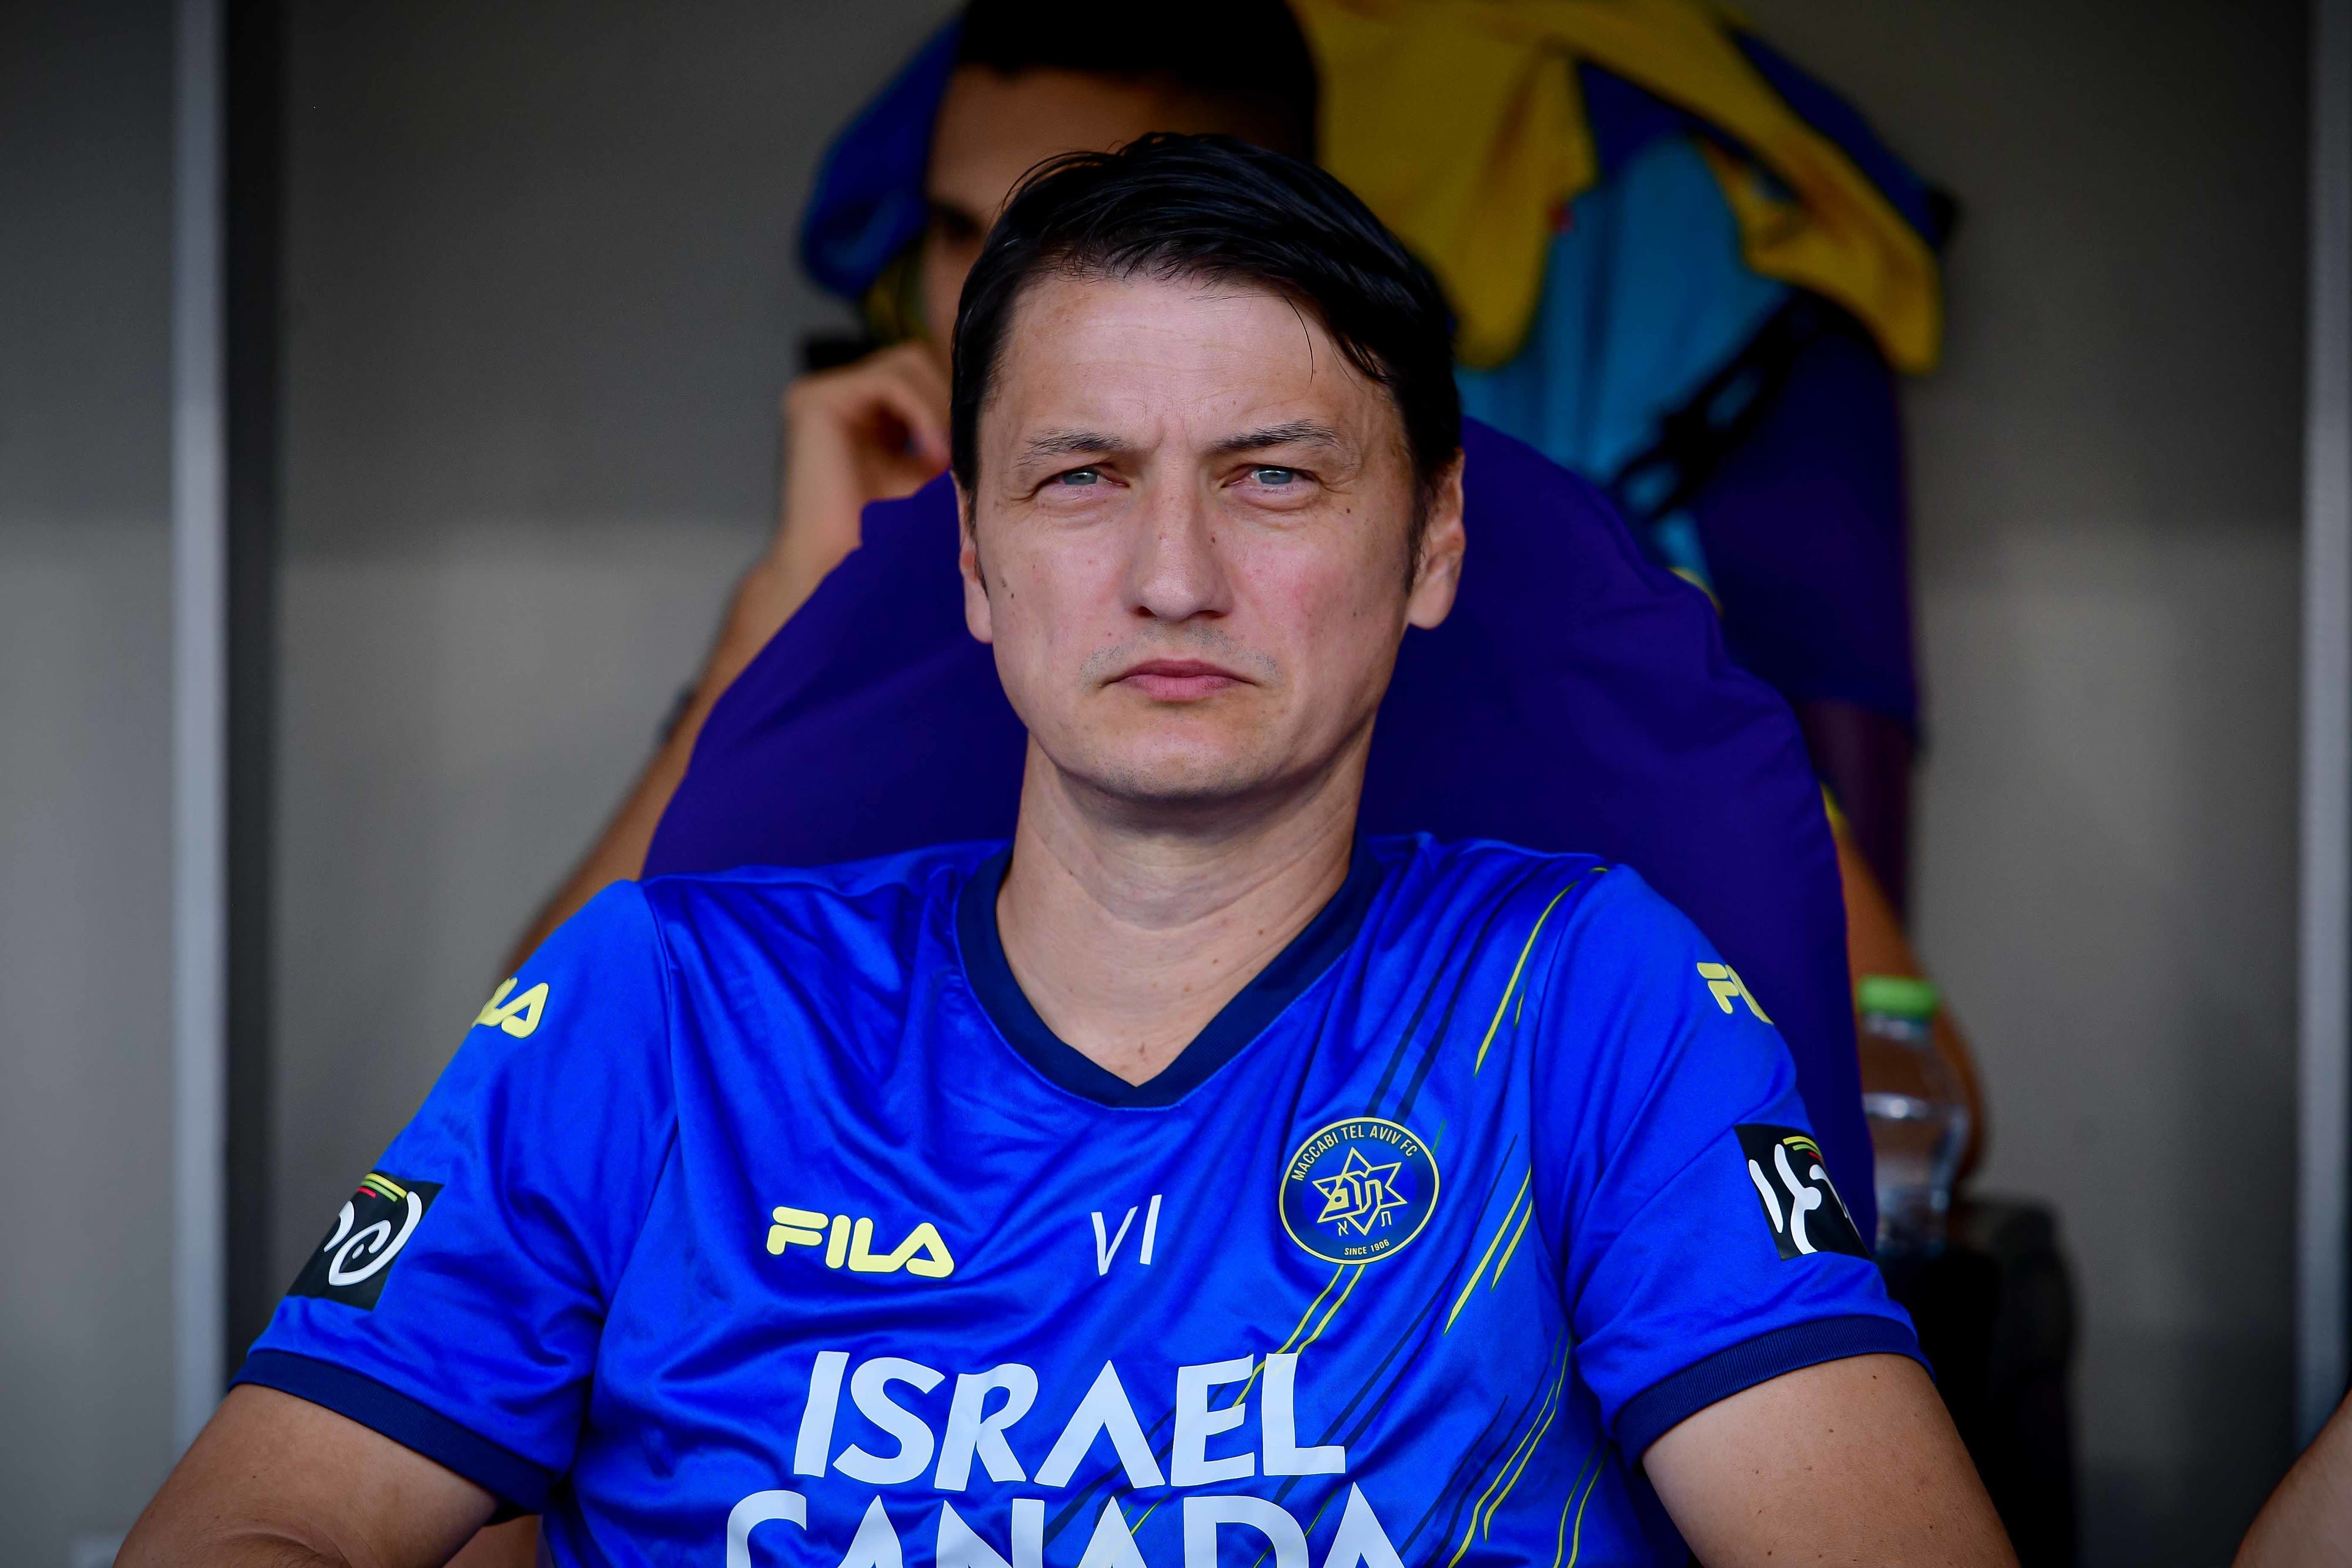 Vladan Ivitch is the coach of Maccabi Tel Aviv